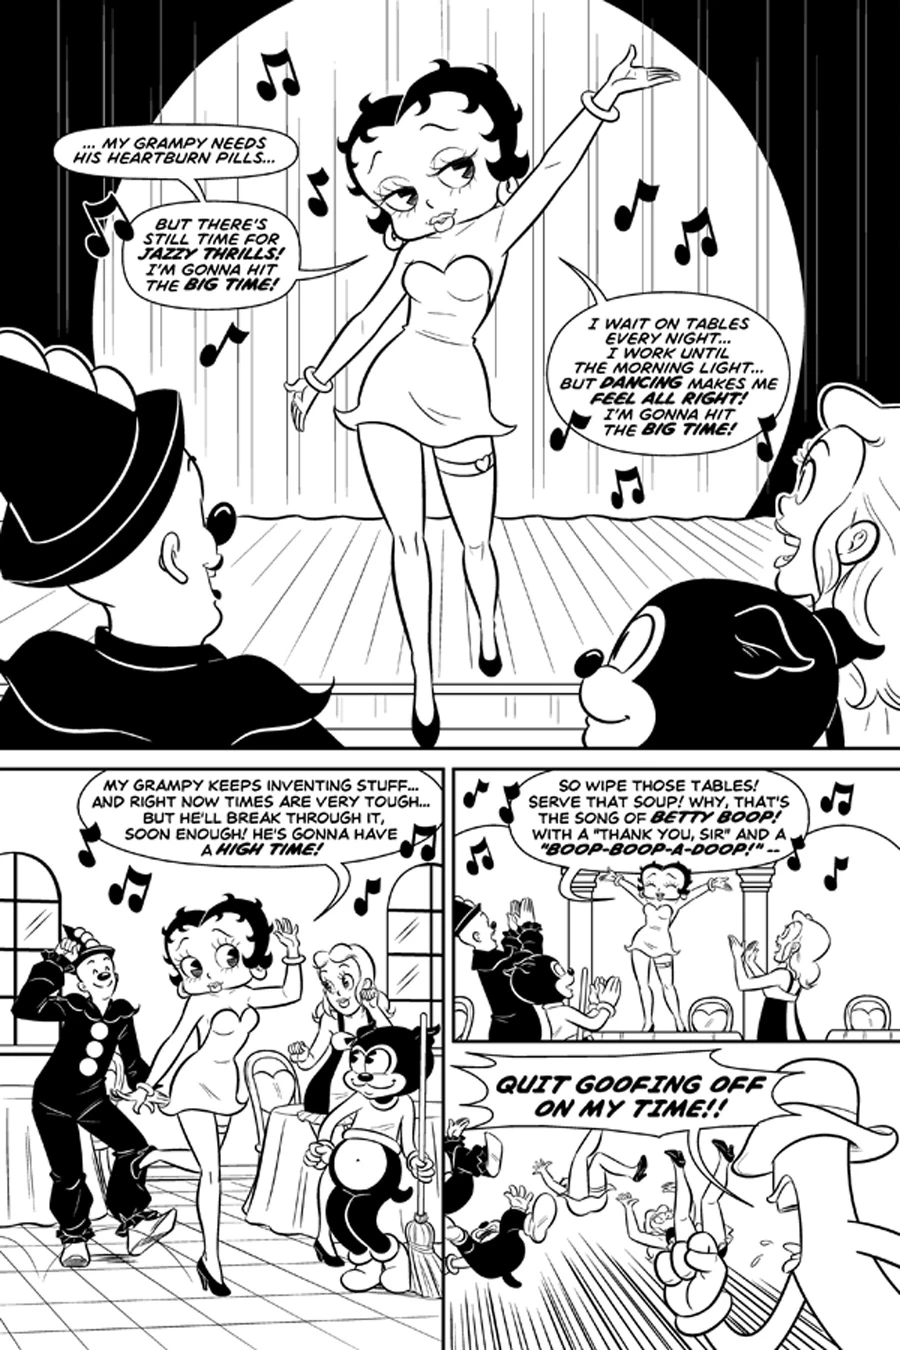 Betty Boop #1, Dynamite Entertainment